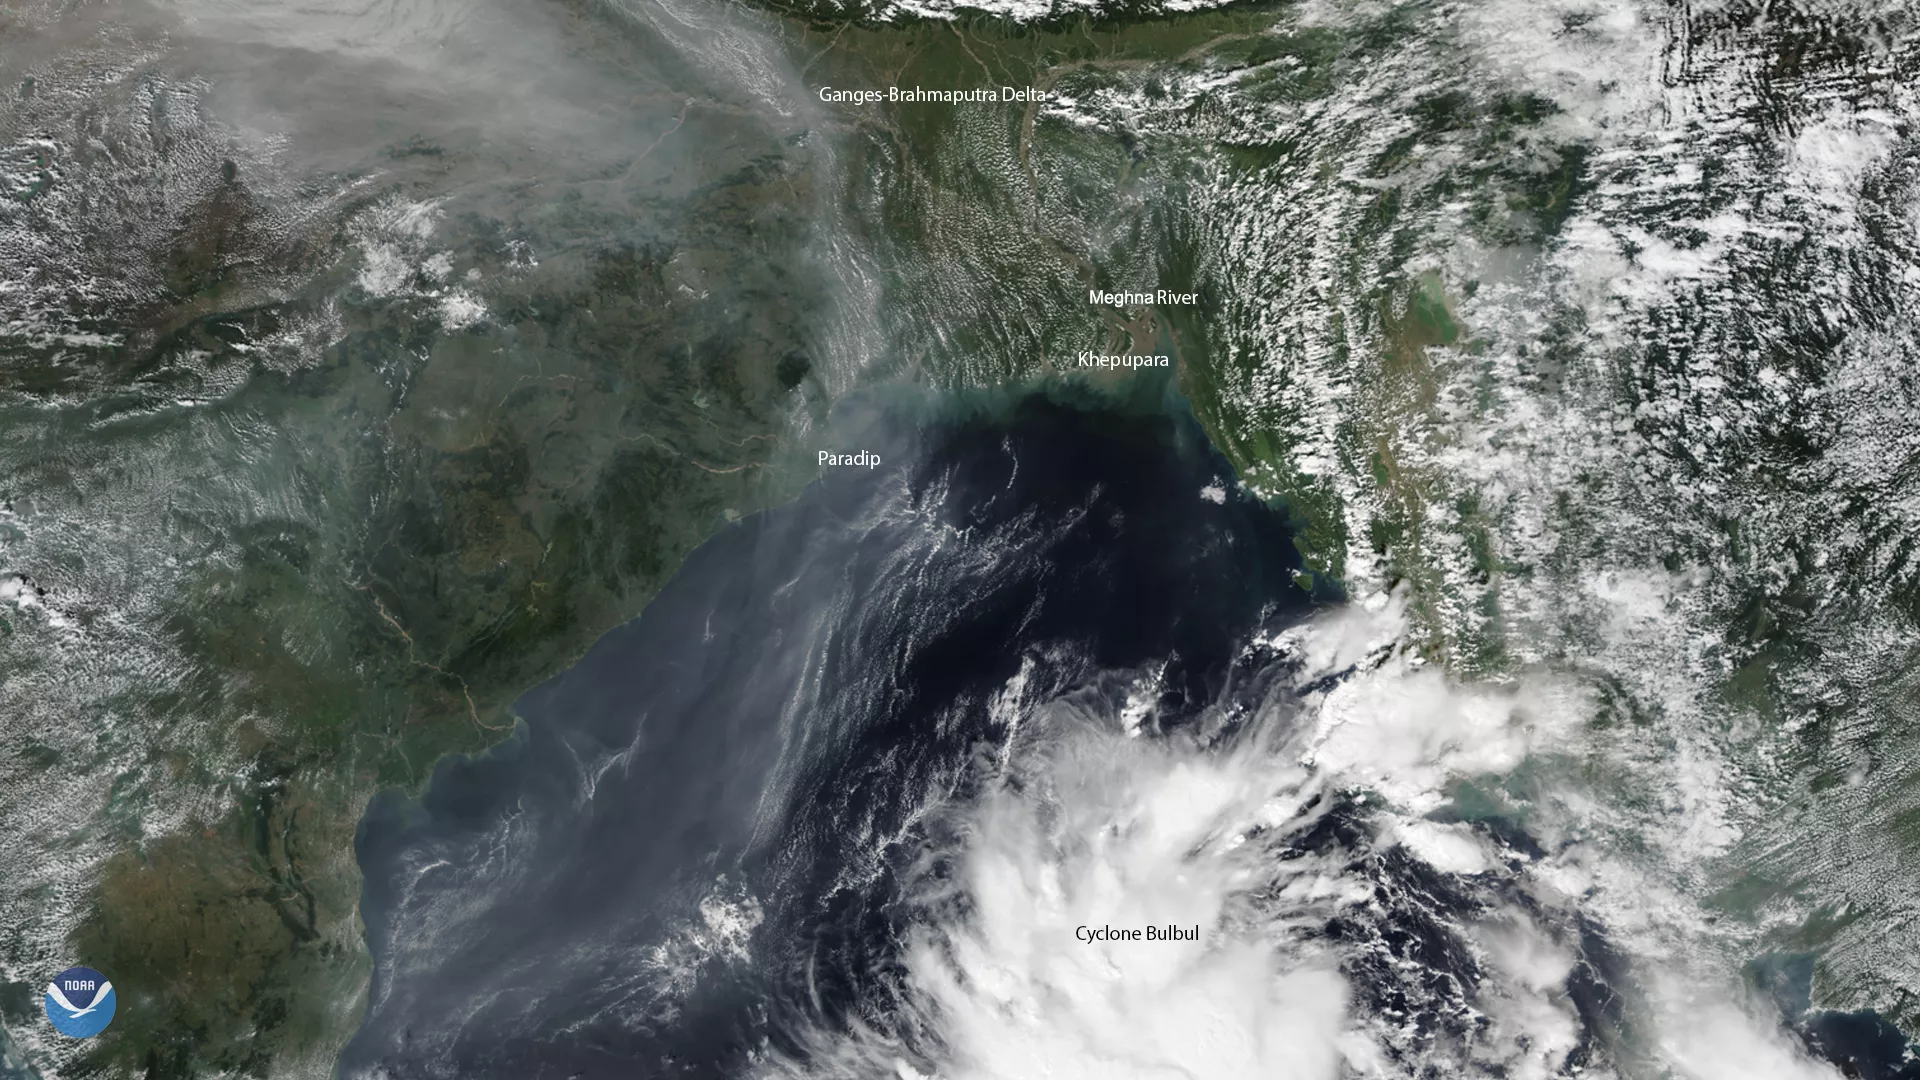 Torrential rain and developing Cyclone Bulbul near Bangladesh